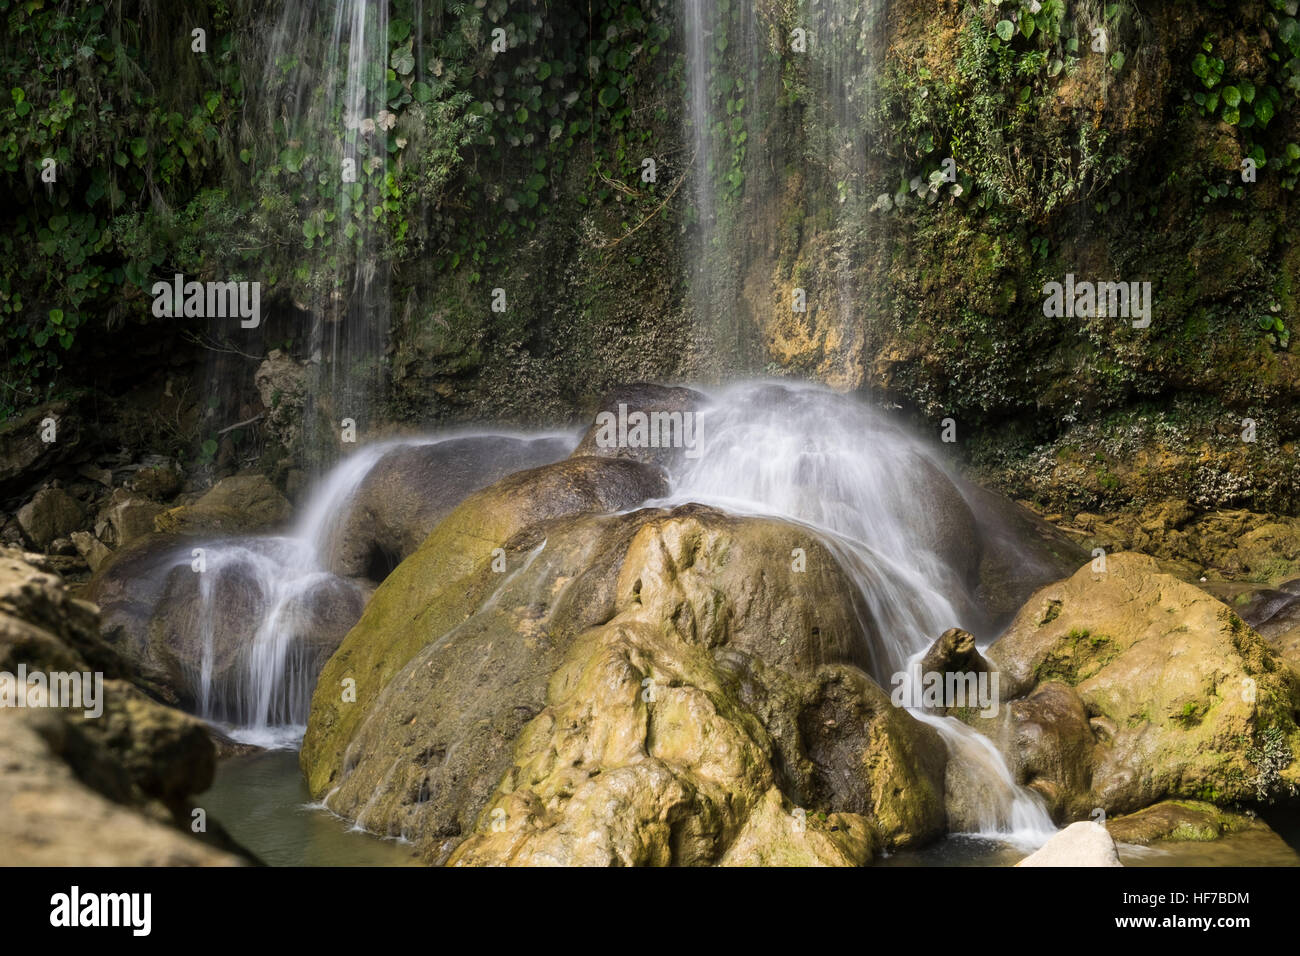 Base of the waterfall, Salto del Arco Iris, Soroa, Cuba Stock Photo